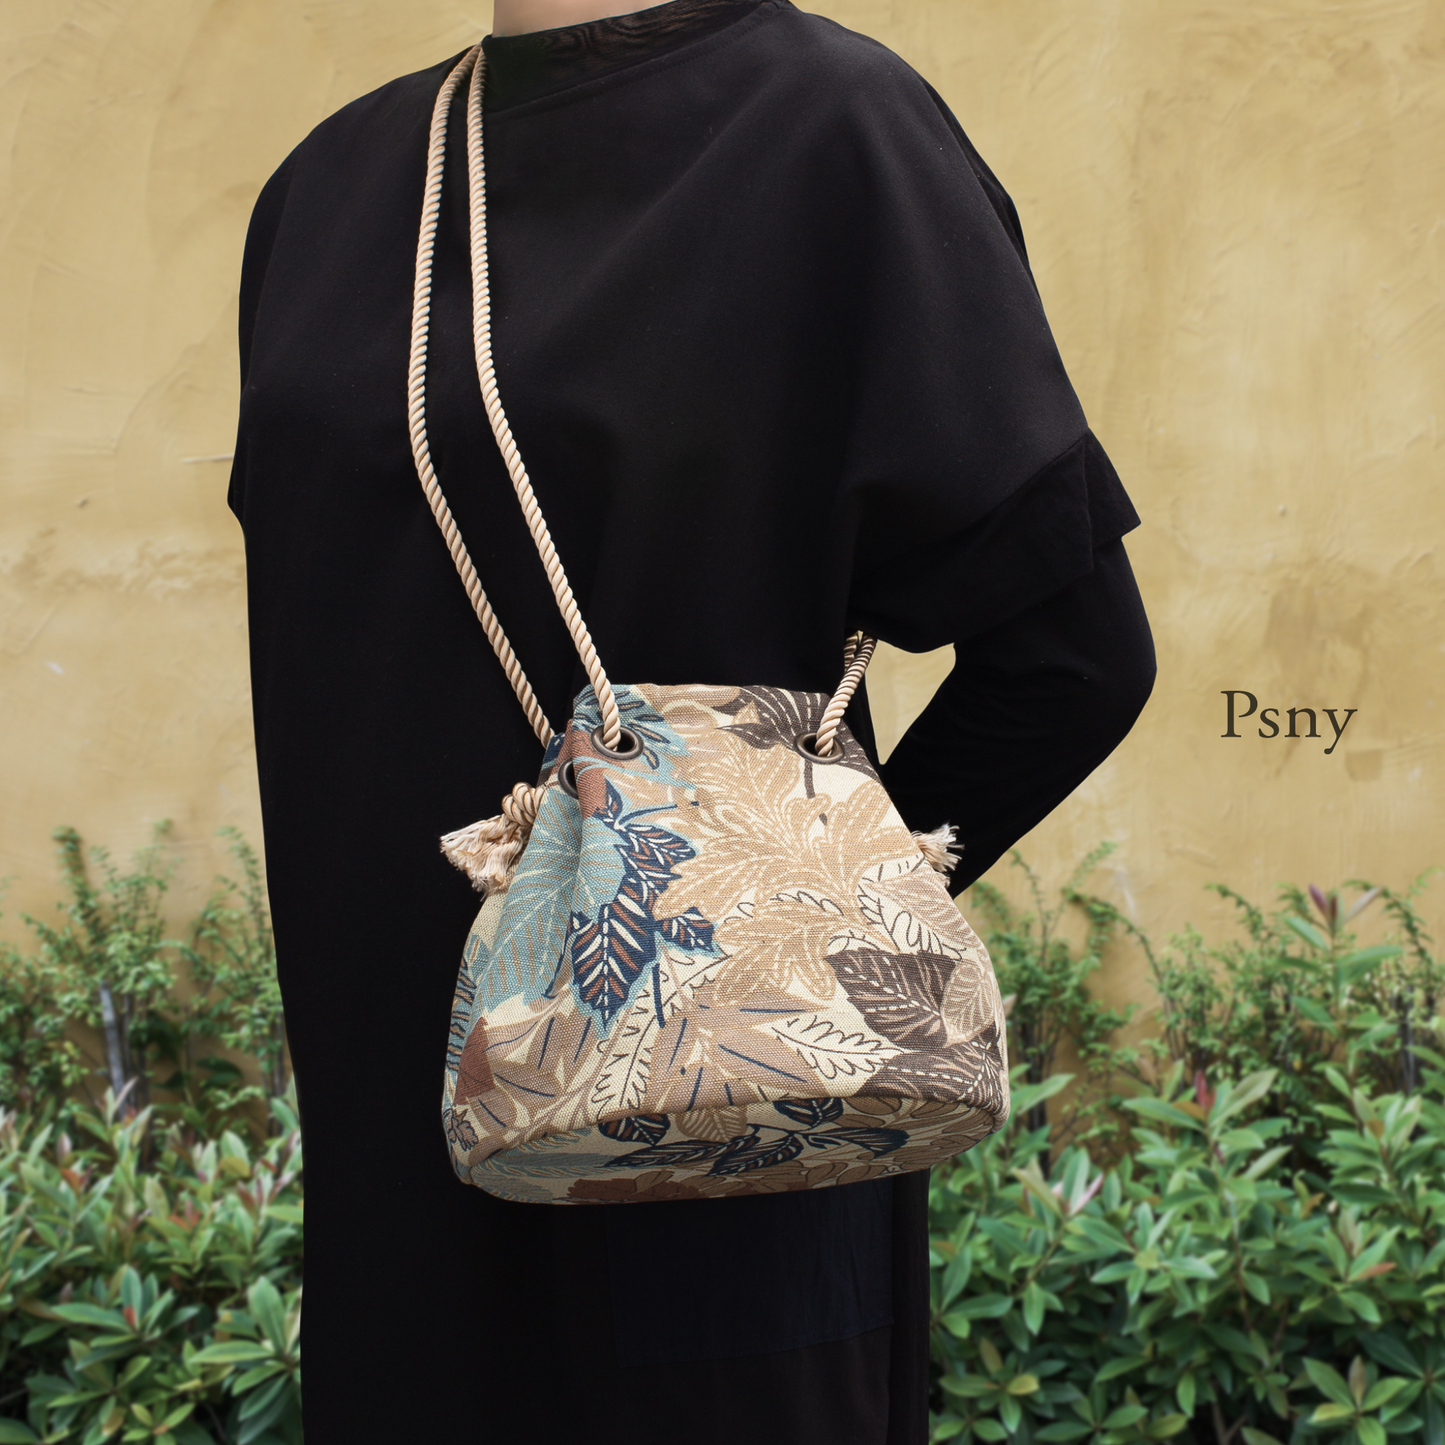 PSNY Botanical Brown Drawstring Bag BG26